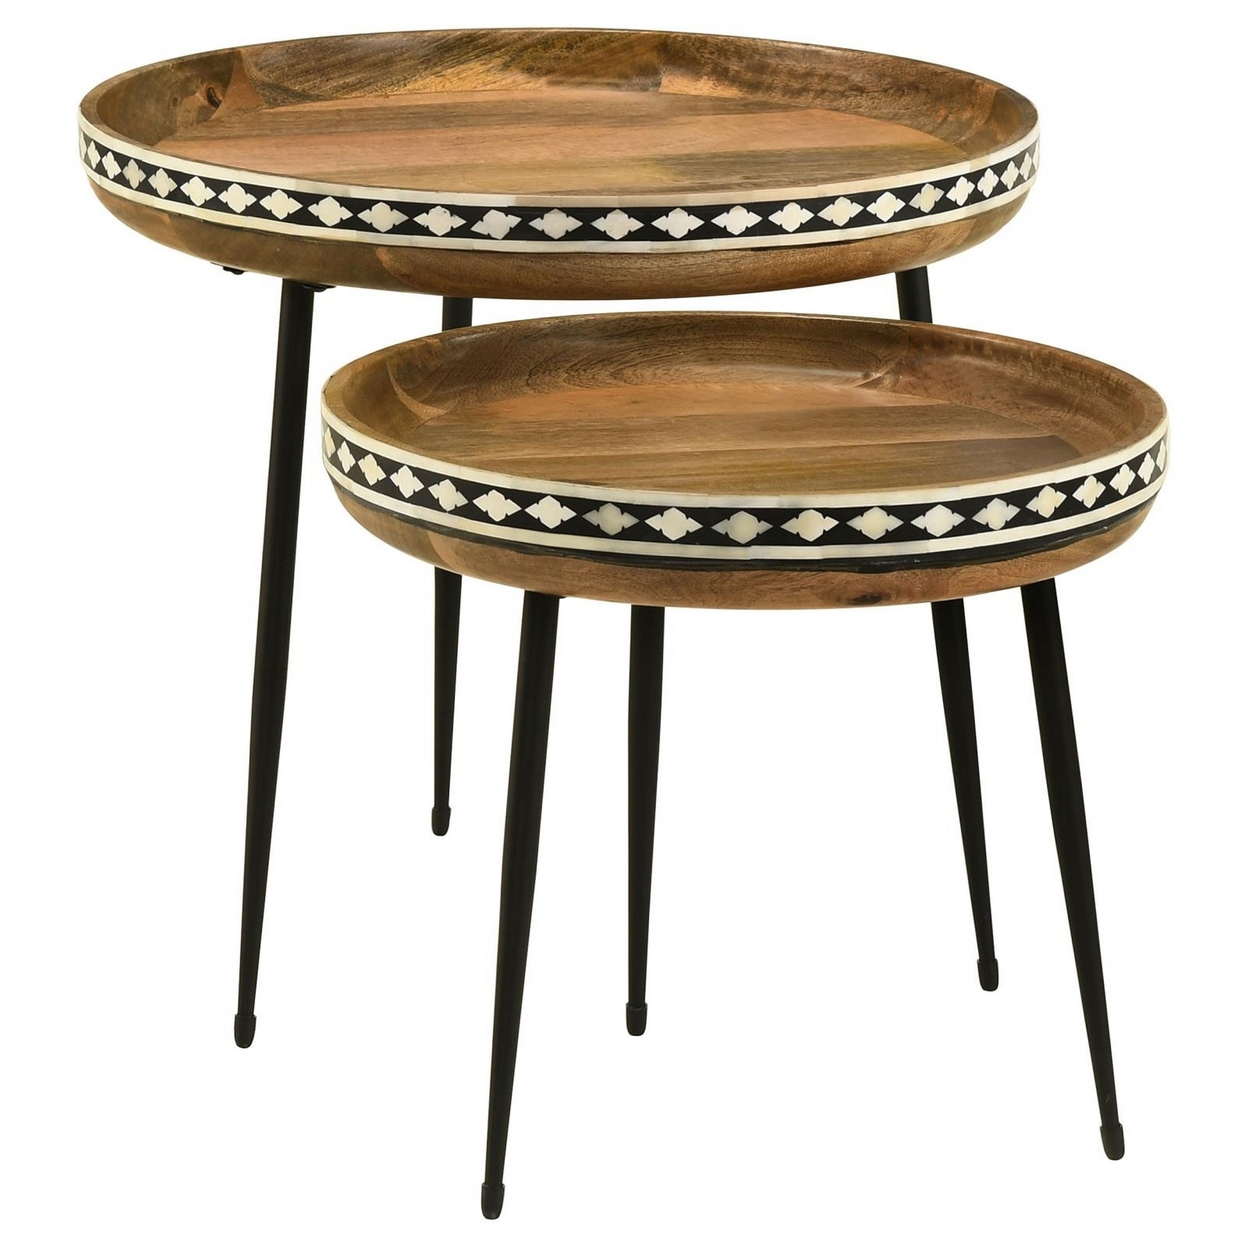 2 Piece Nesting Tables With Inlaid Bone Detail Design, Mango Wood, Brown -Saltoro Sherpi